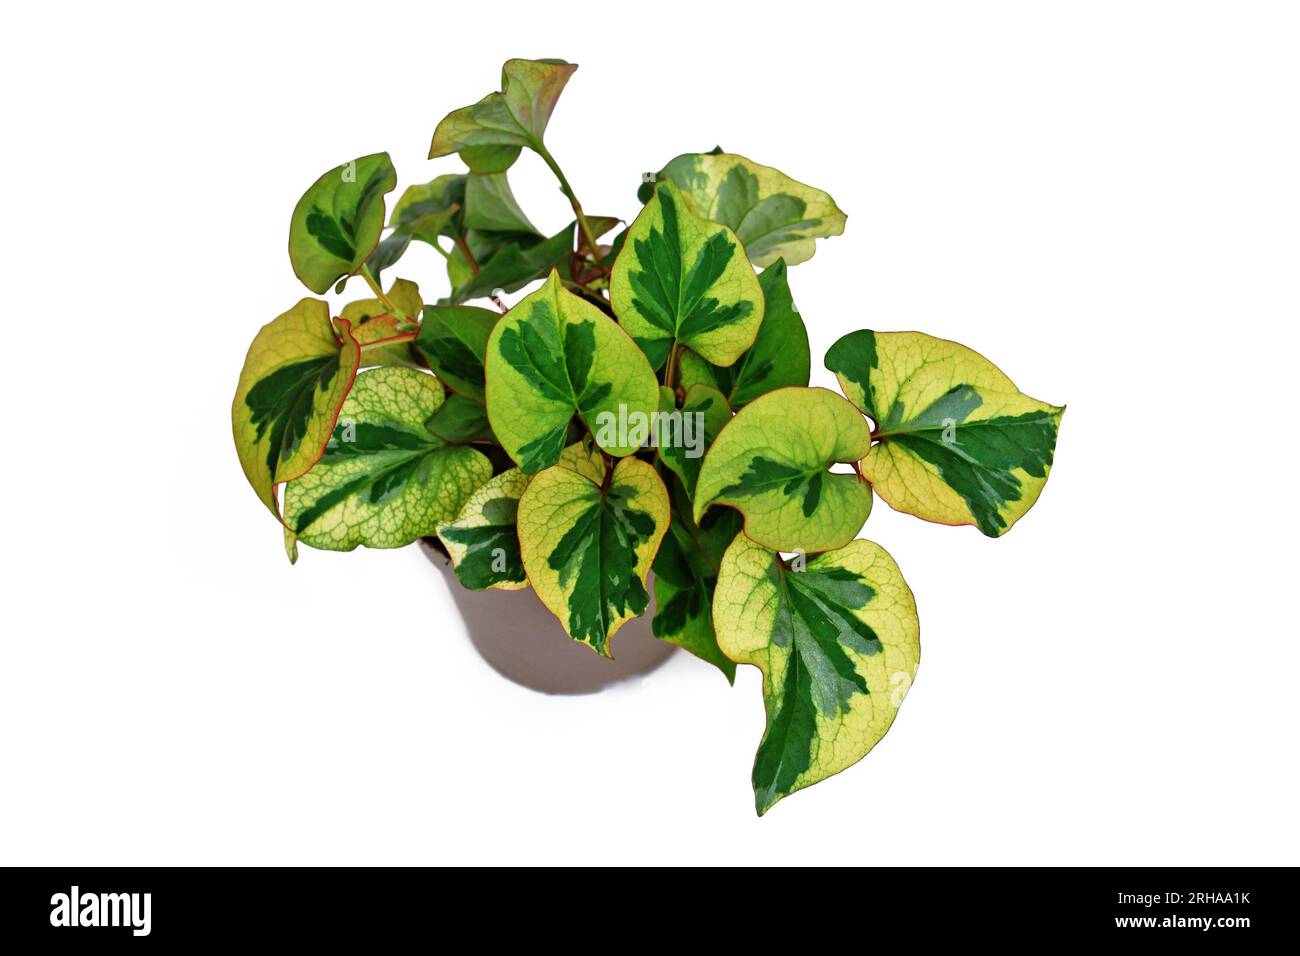 Multicolored 'Houttuynia Cordata Chameleon' plant in flower pot on white background Stock Photo